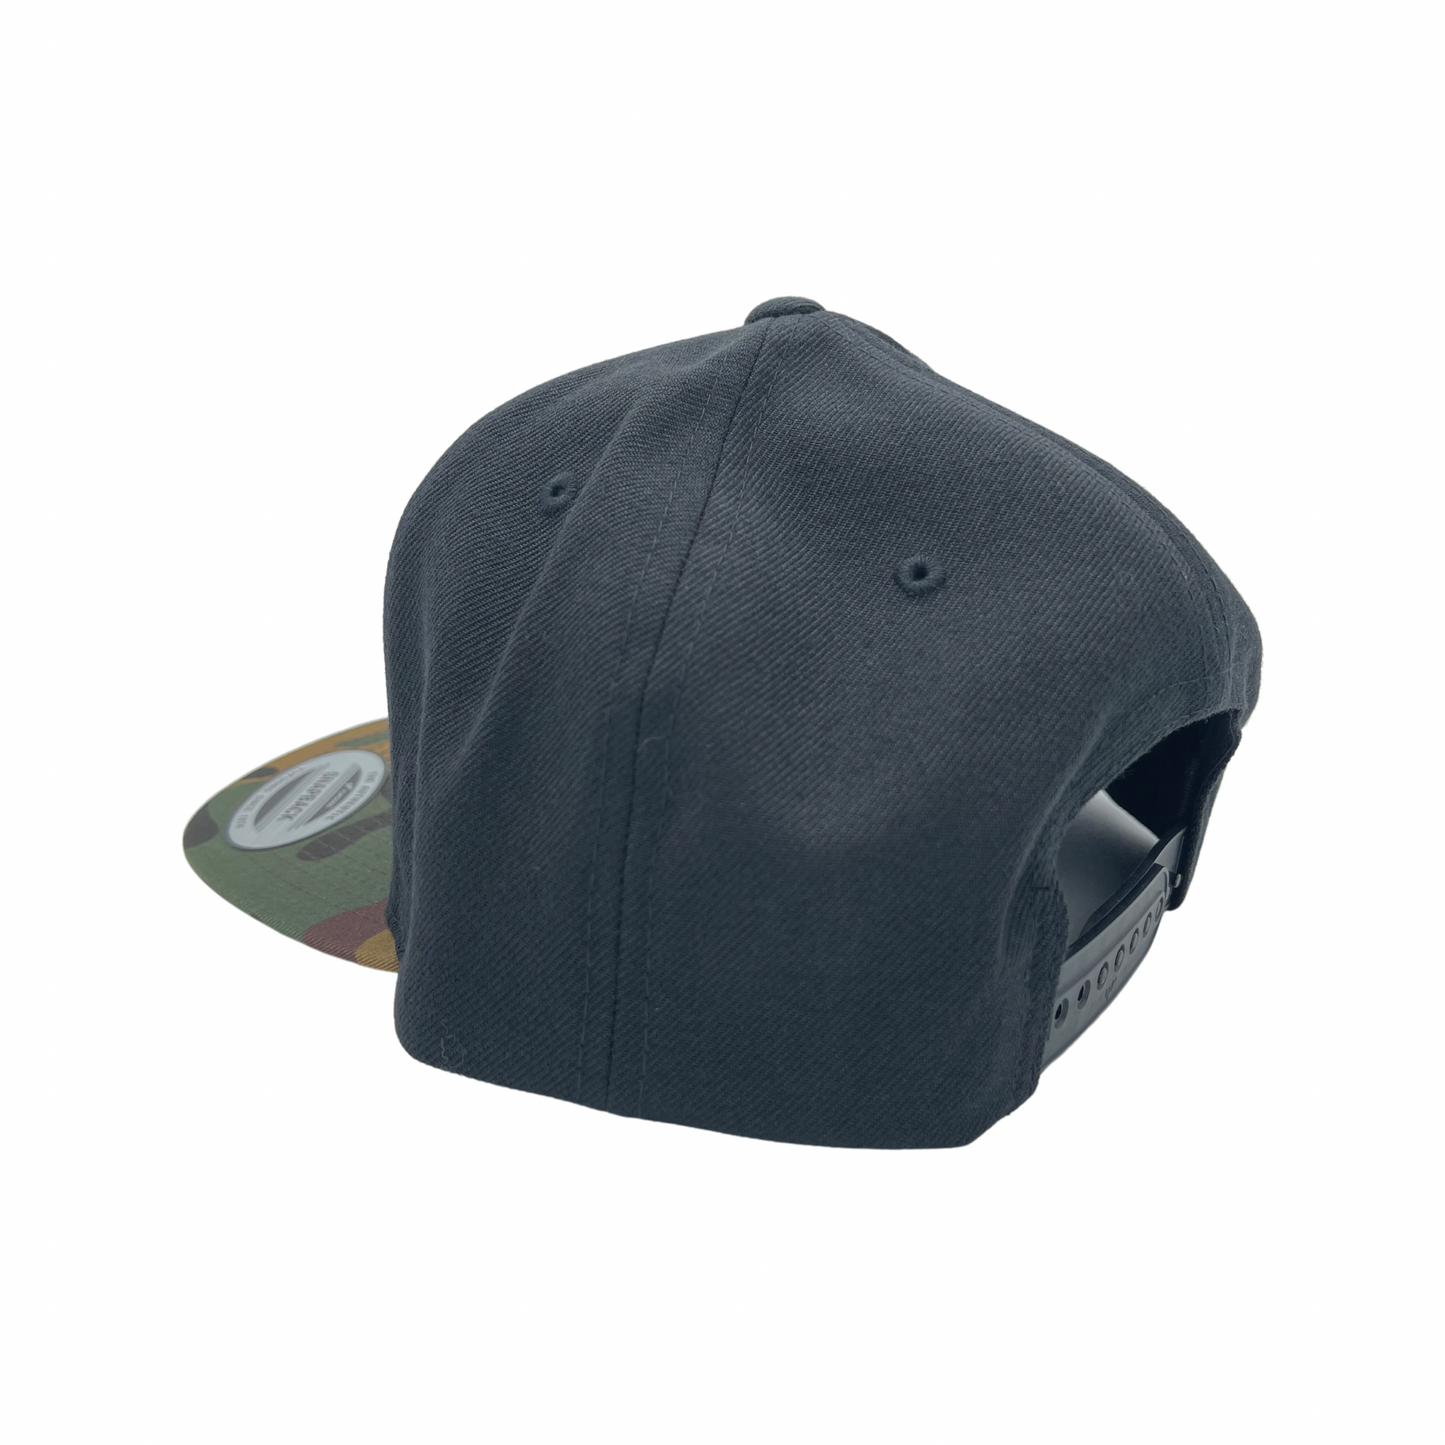 Vixere Blackout Classic Snapback Hats